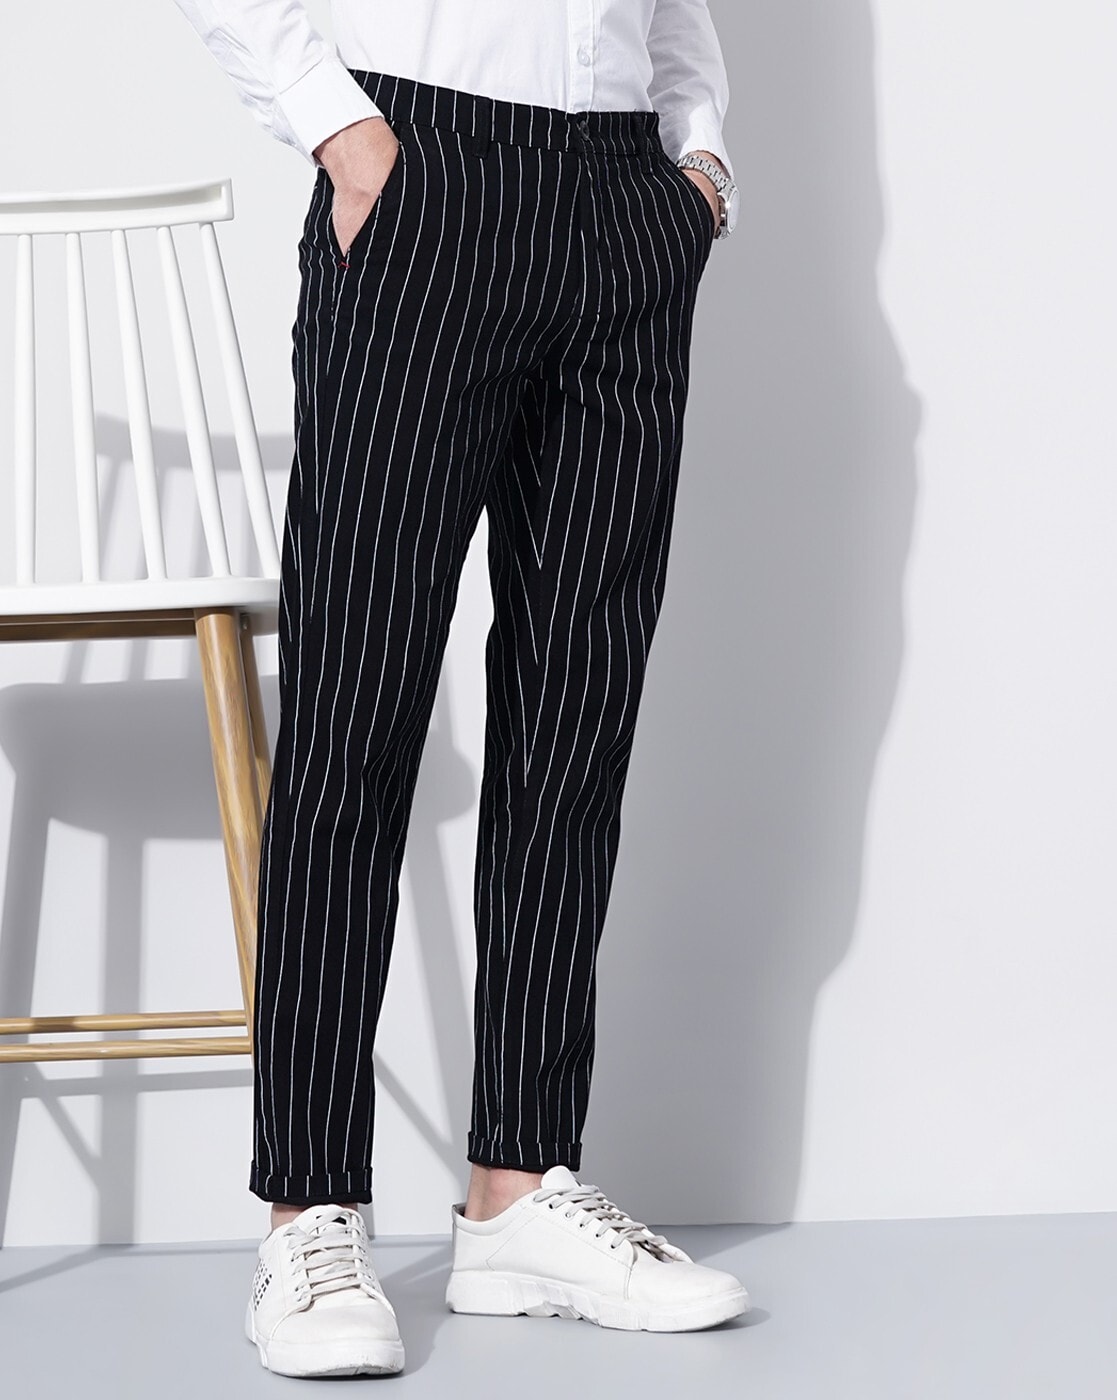 STRIPE PANTS OUTFIT IDEAS  Stripe pants outfit Mens linen pants Mens  clothing styles